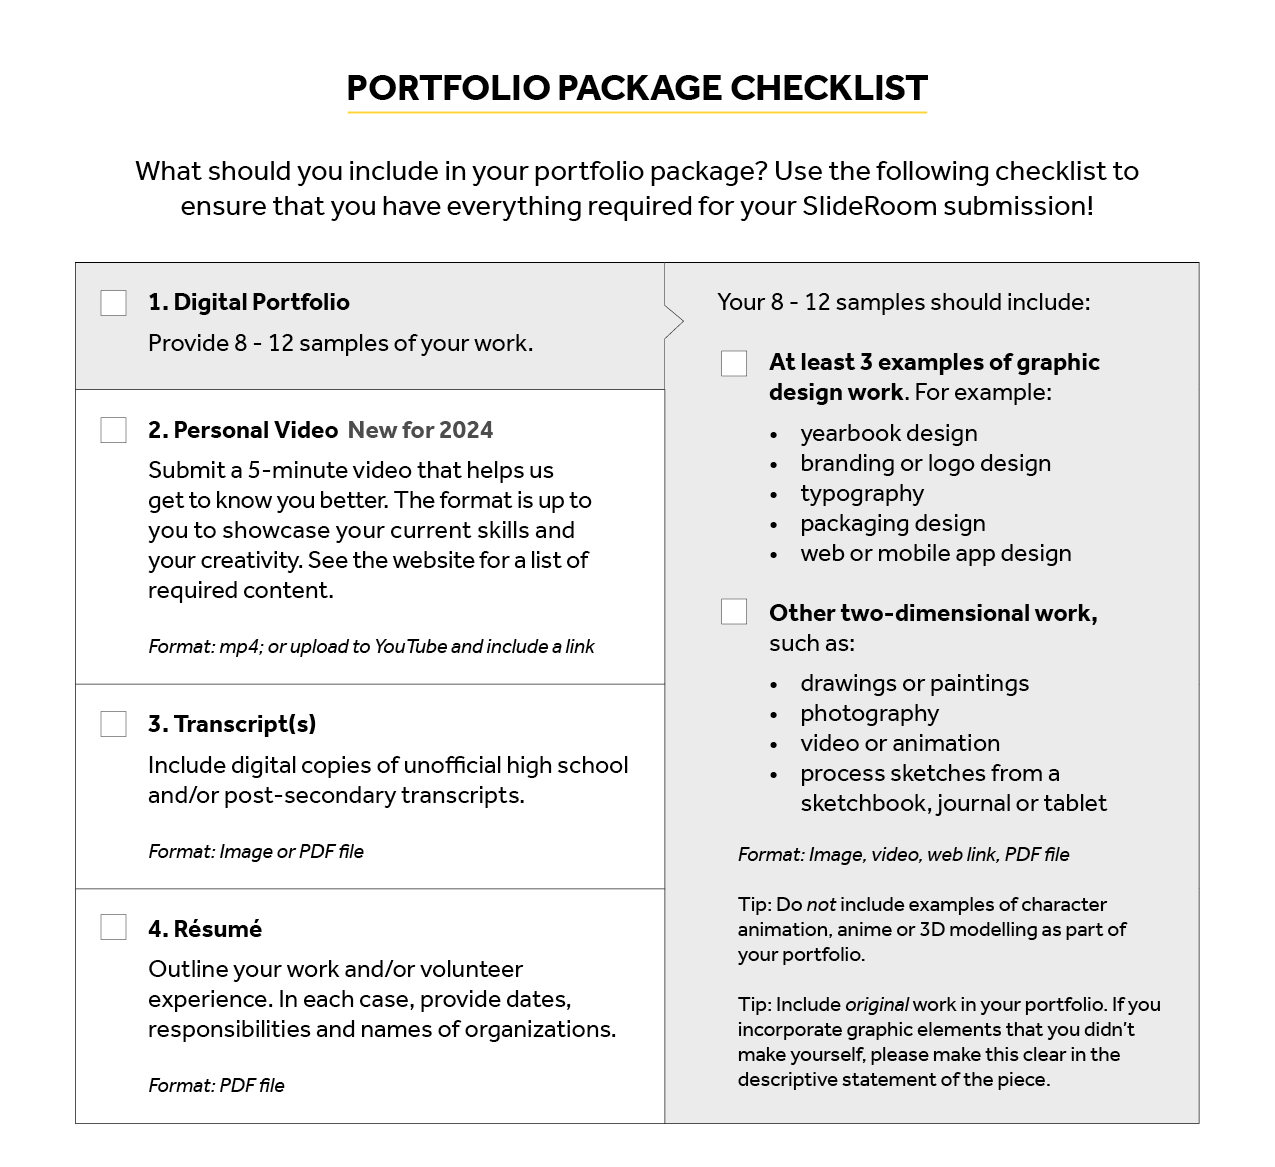 GDMA Portfolio Package Checklist